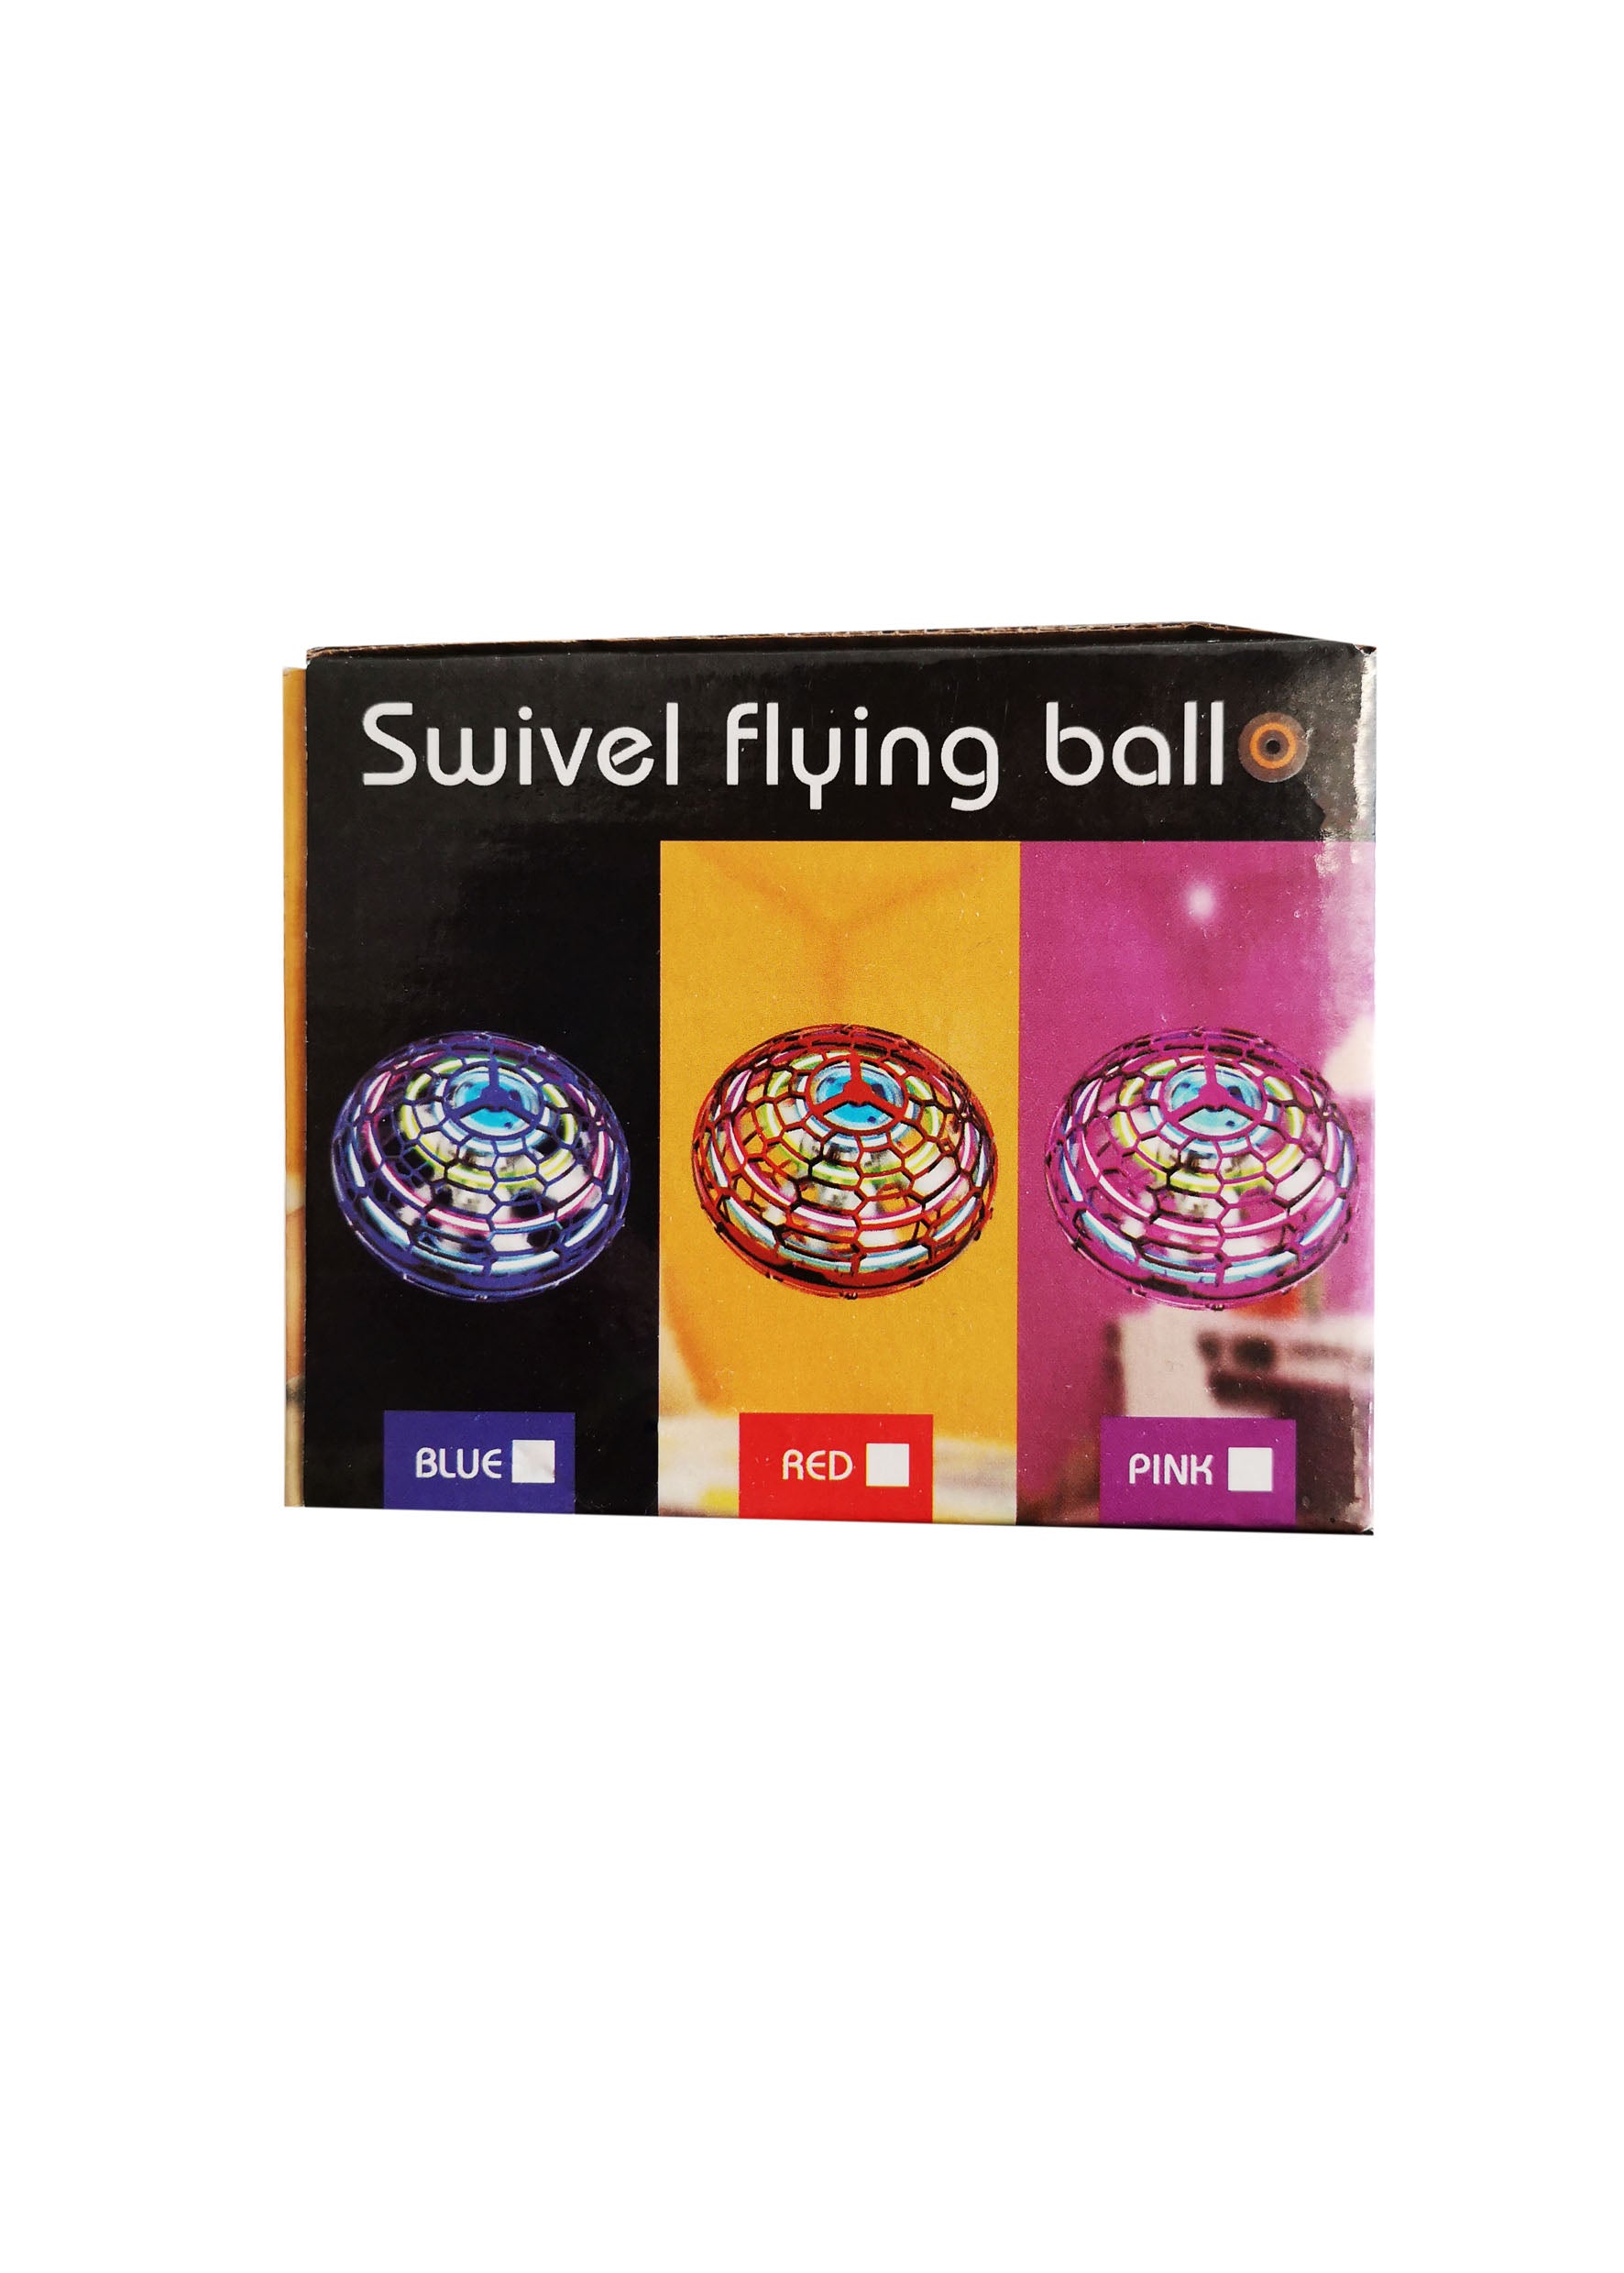 Boule Volante Lumineuse - Flying Ball Hover Ball - LED Balle